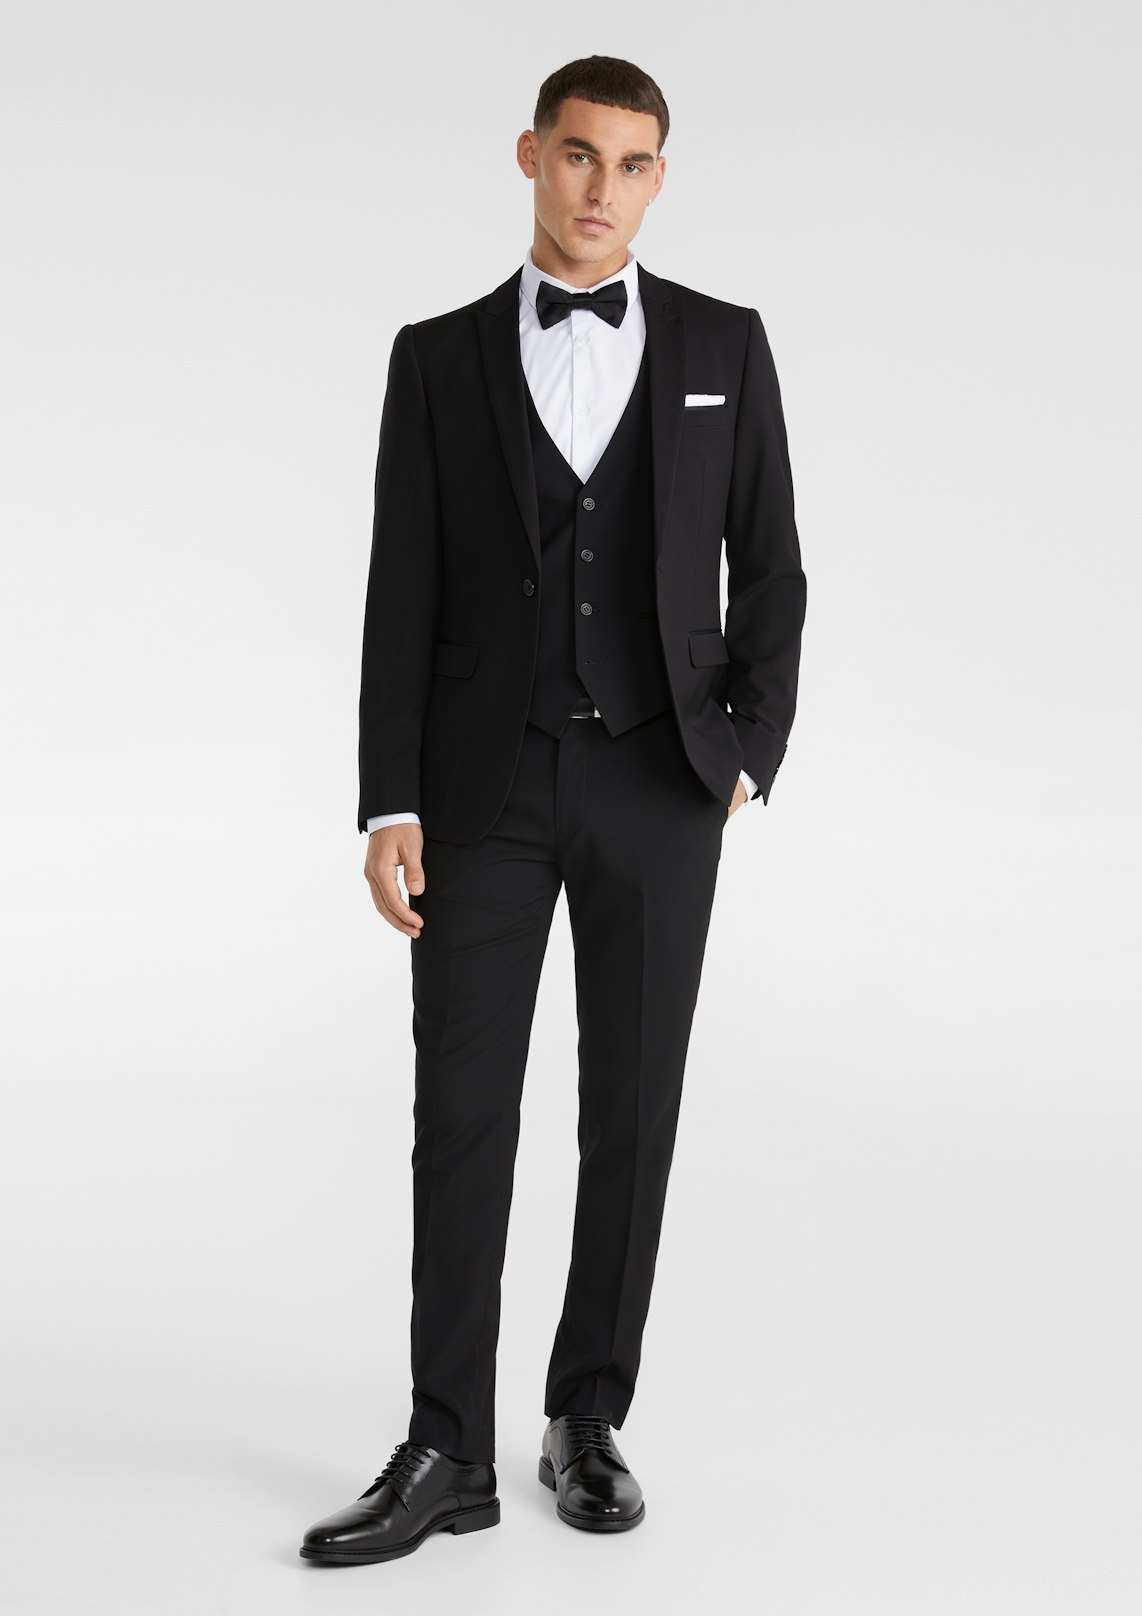 Men's Slim Suits & Tuxedos